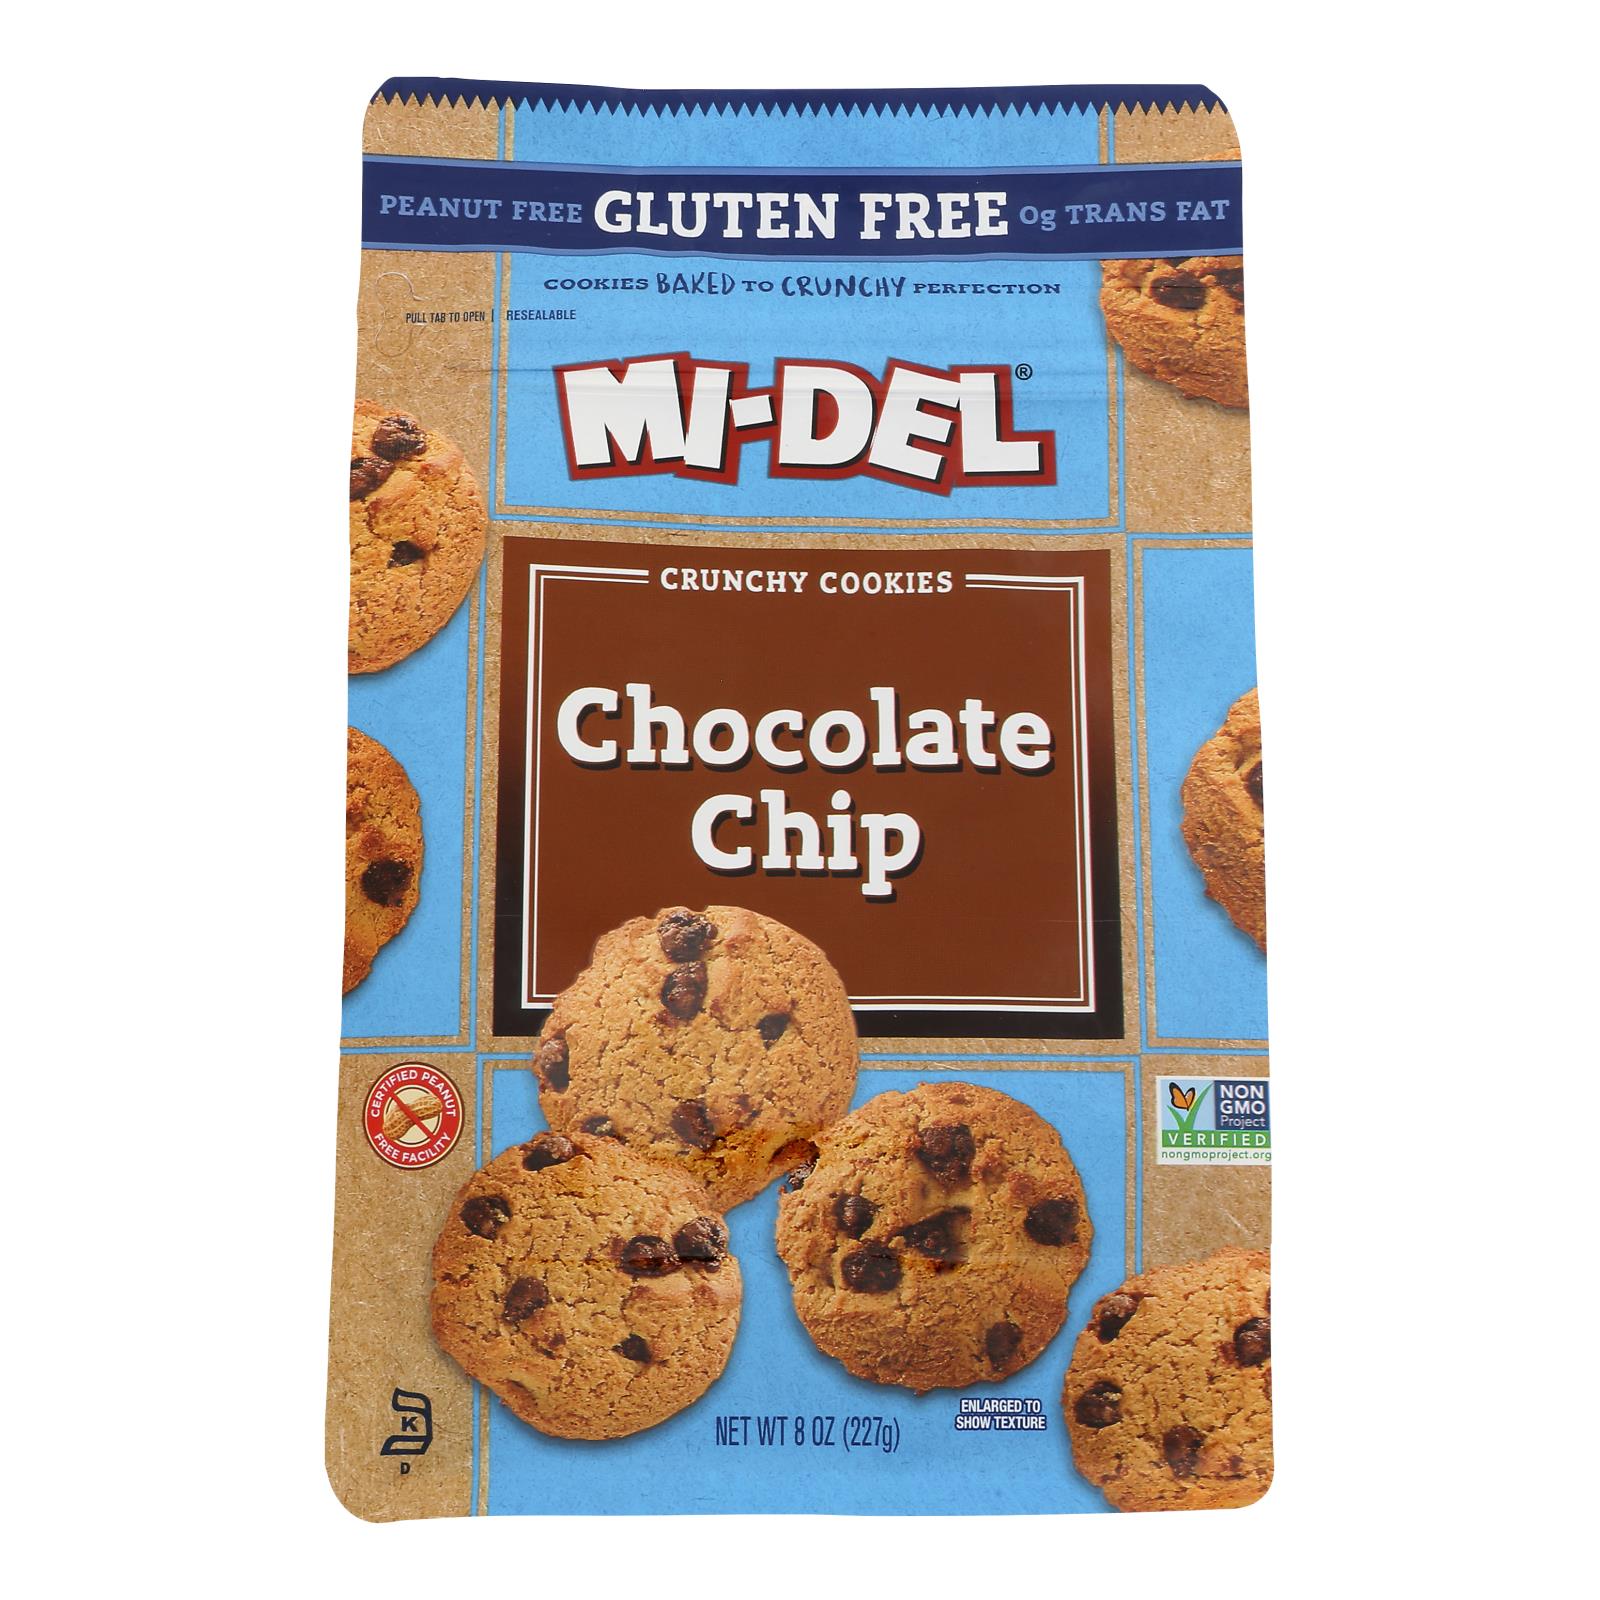 Mi-del's Gluten-free Chocolate Chip Crunchy Cookies  - Case Of 8 - 8 Oz